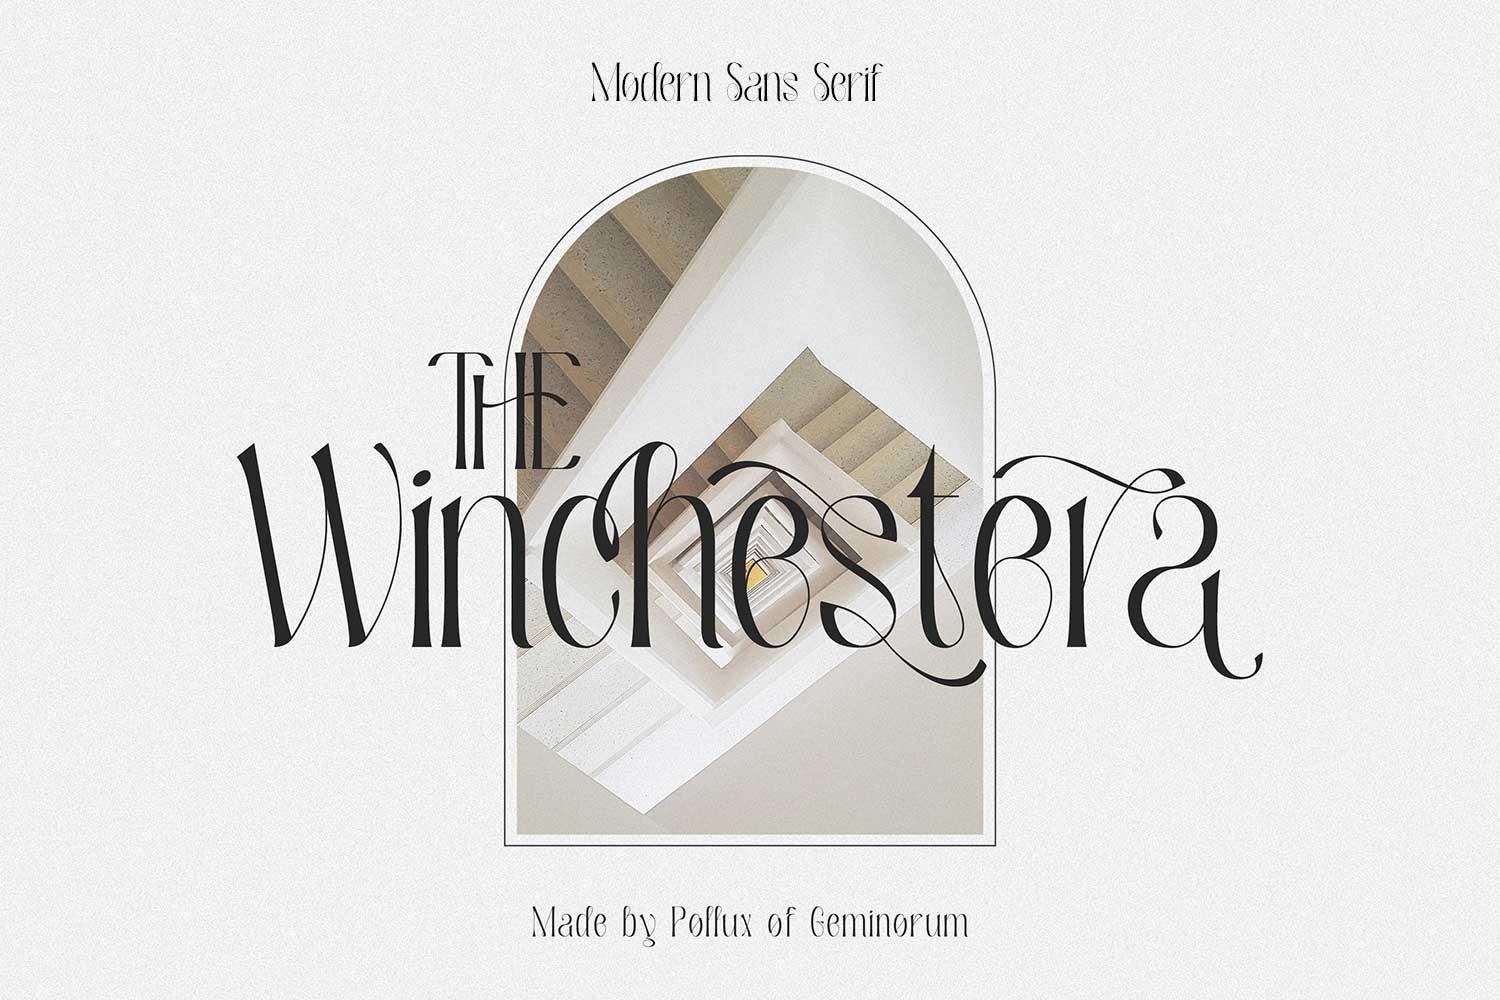 The Winchestera Font